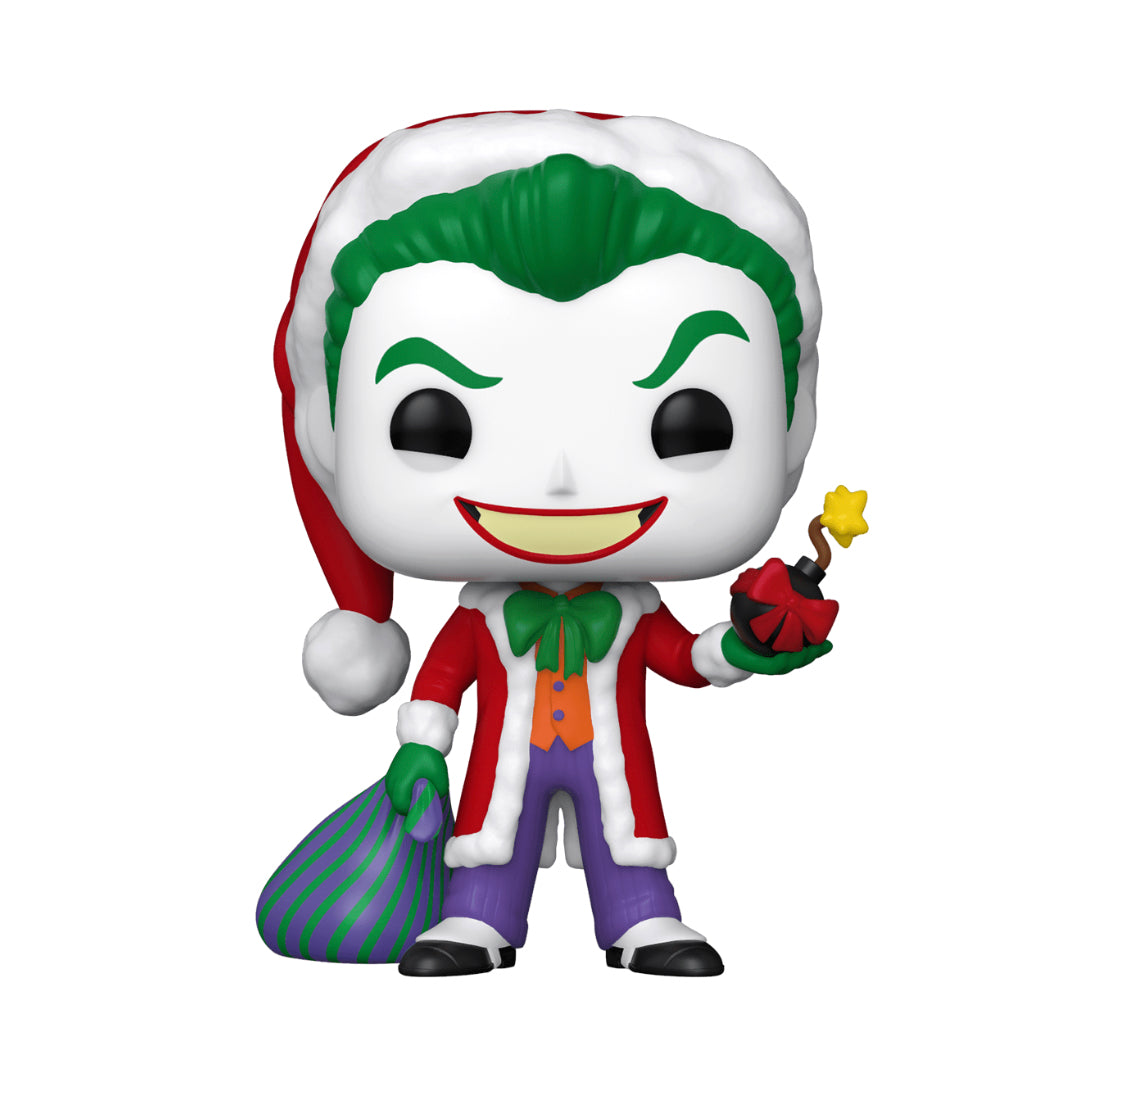 The Joker as Santa 358